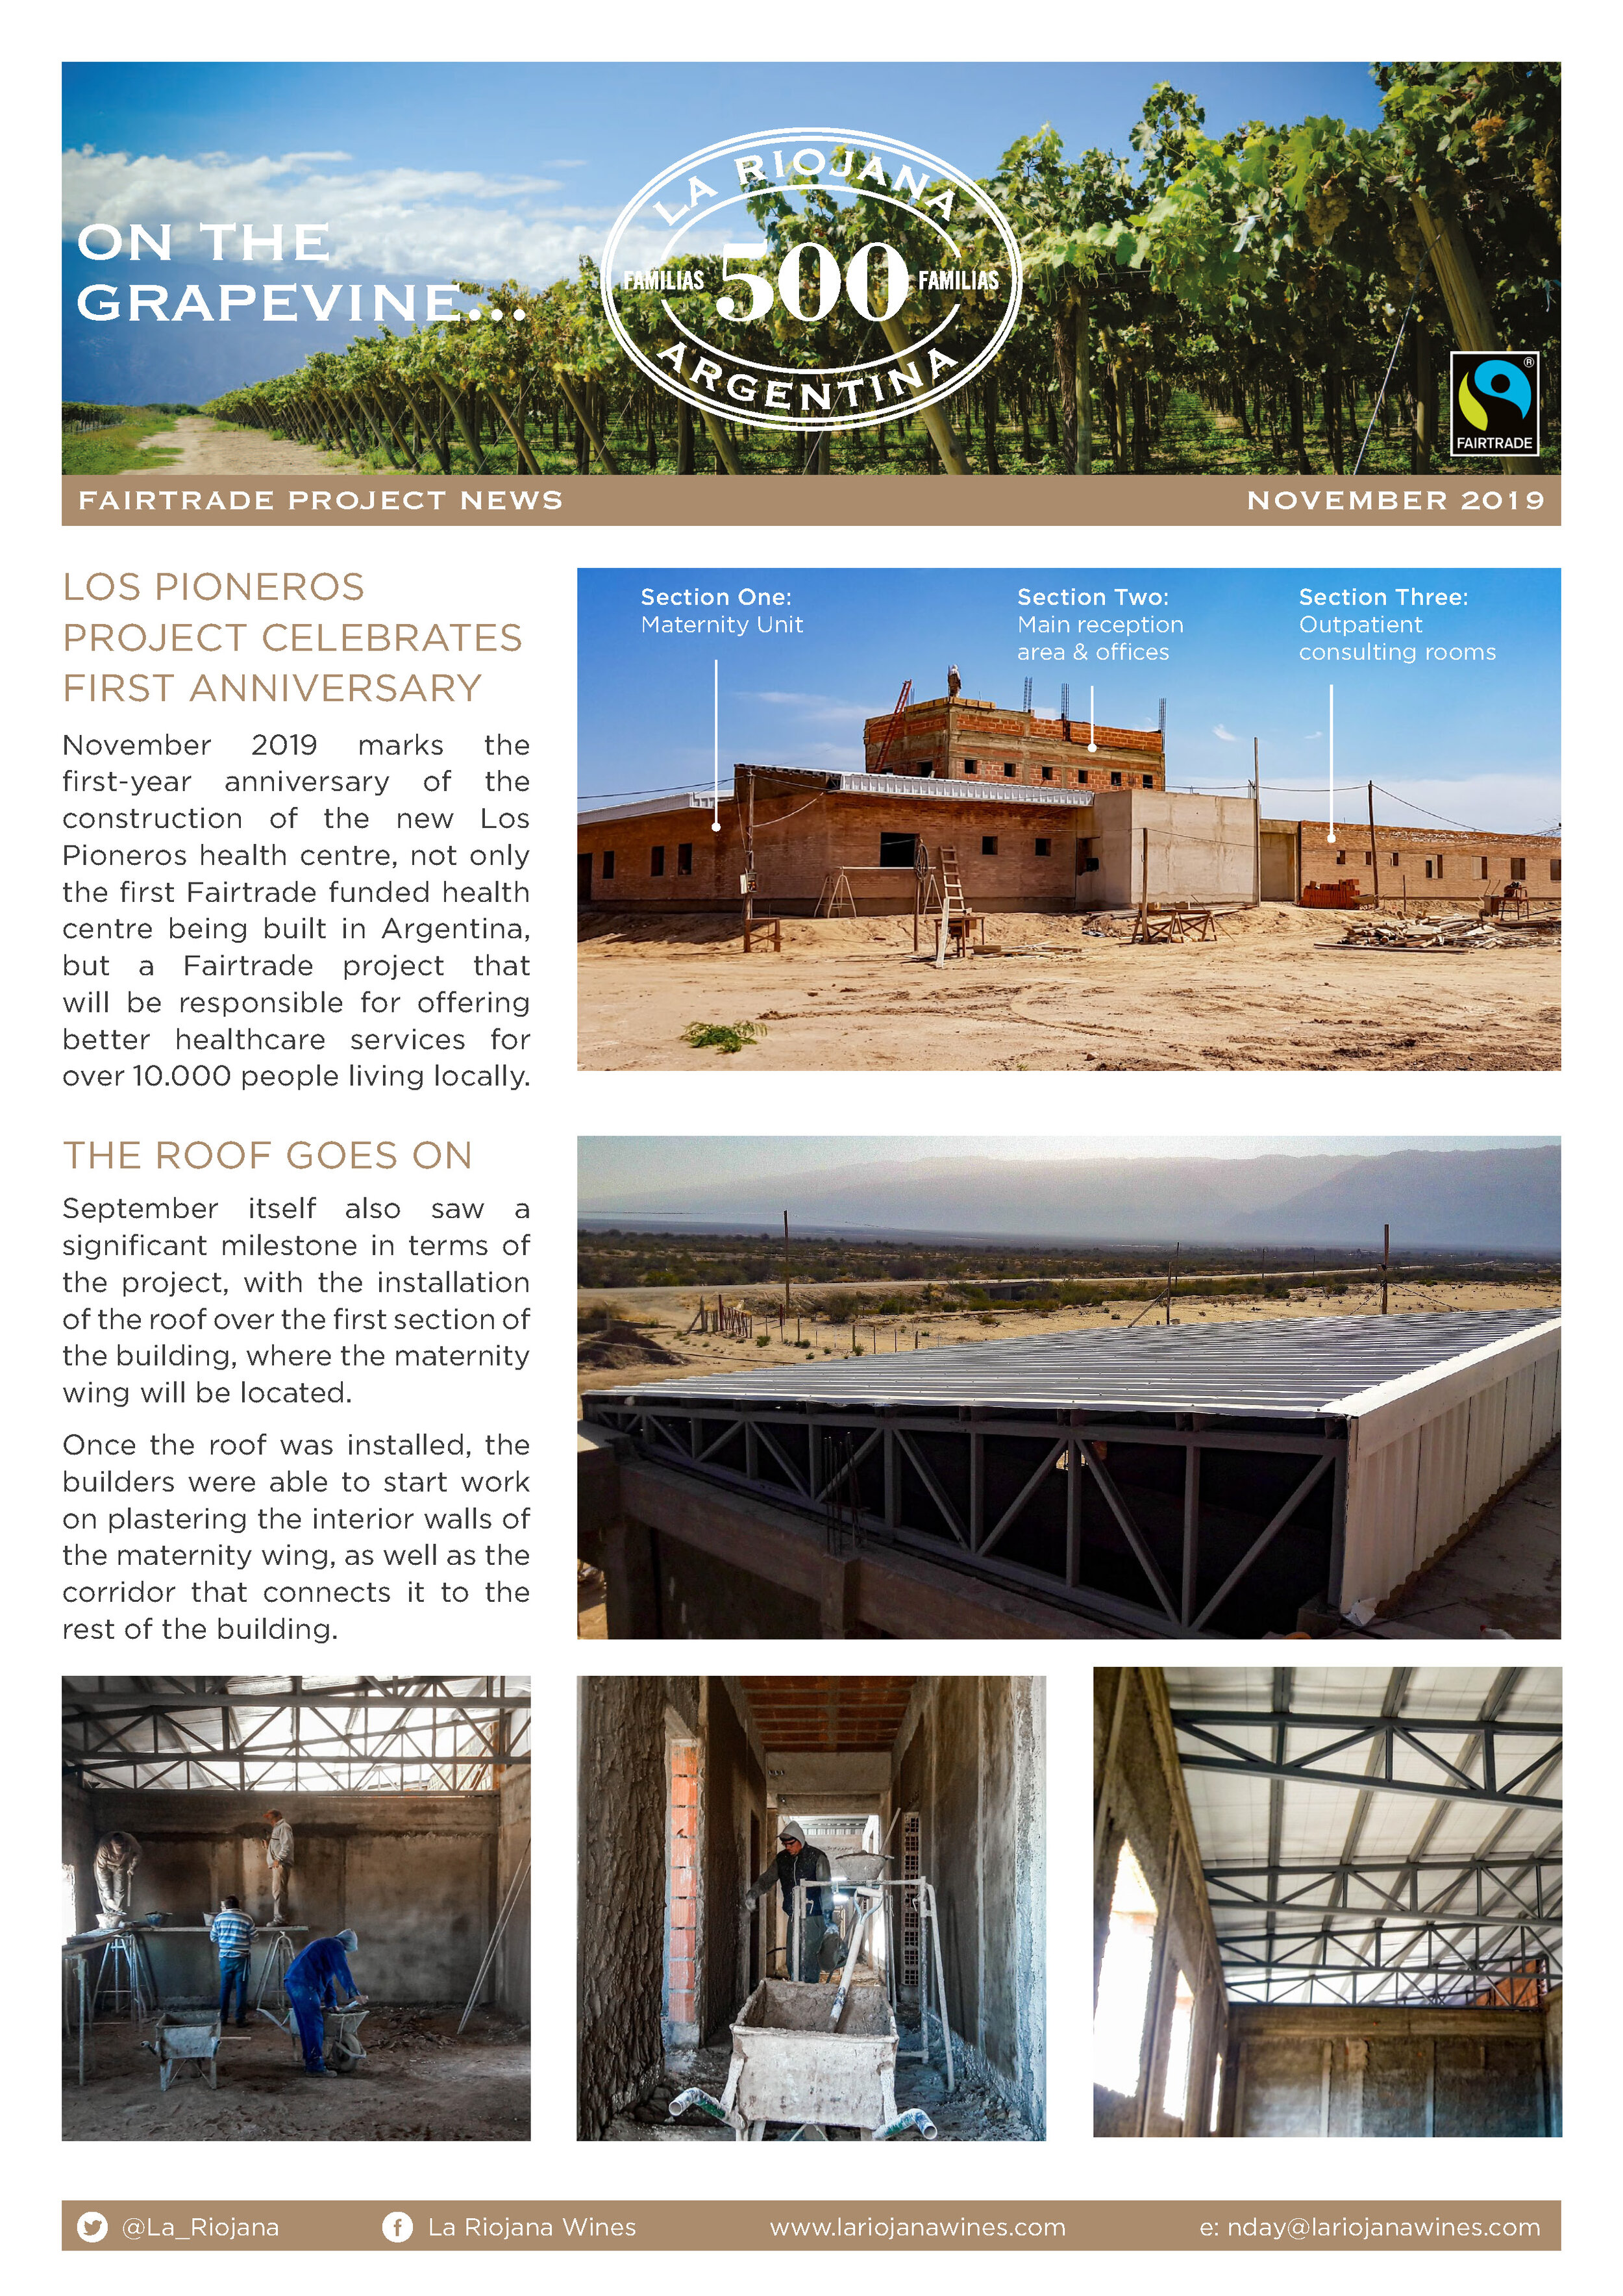 La Riojana - Fairtrade Project News - November 2019_Page_1.jpg